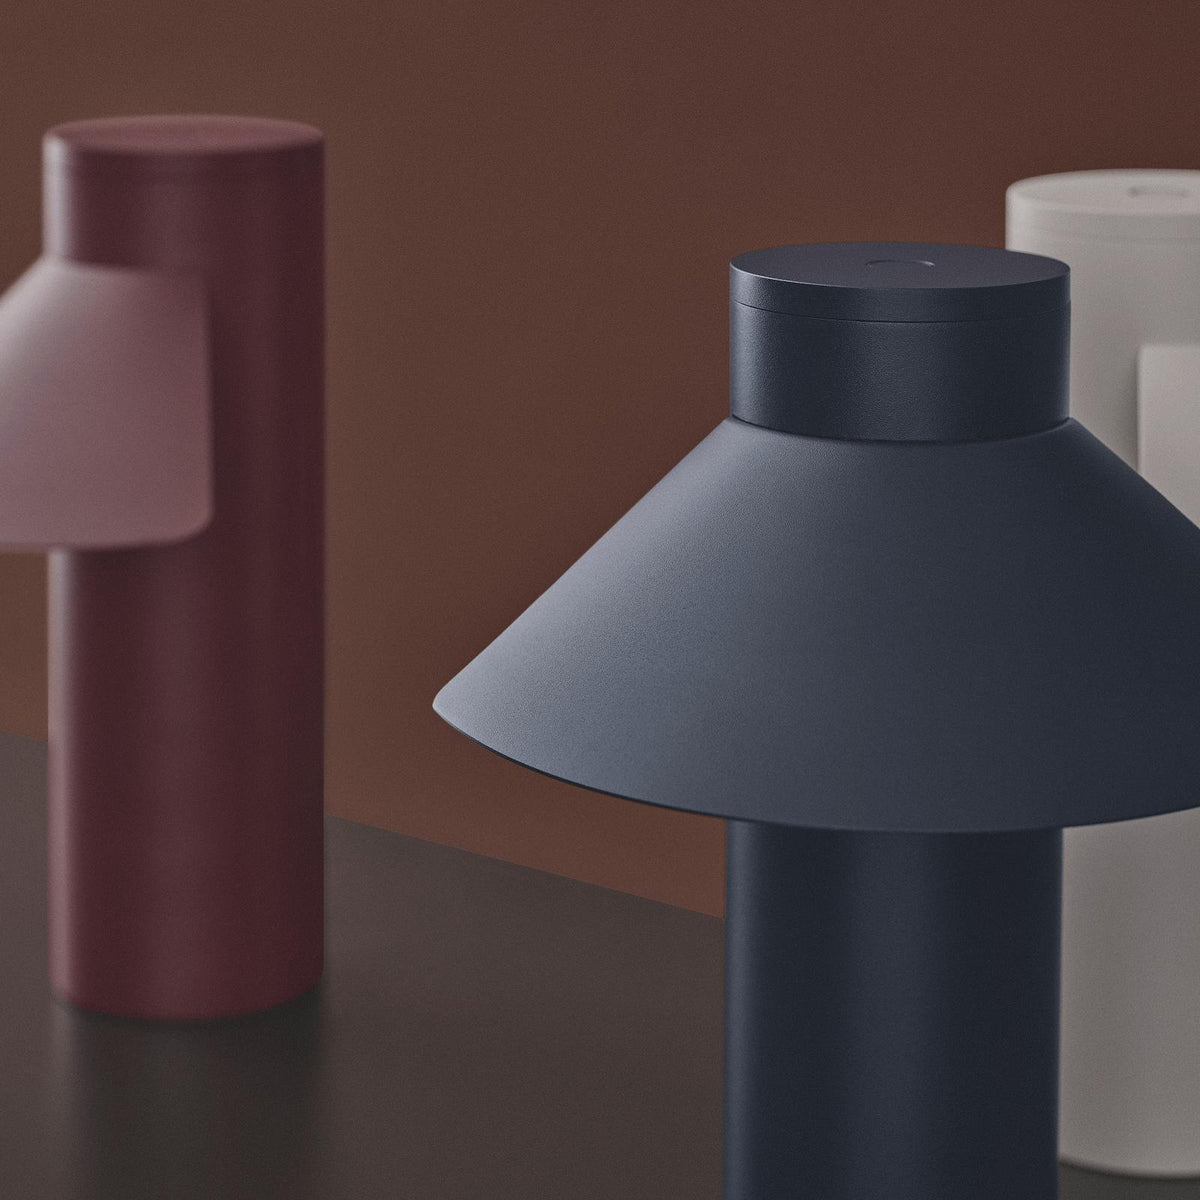 Riscio Table Lamp by Karakter